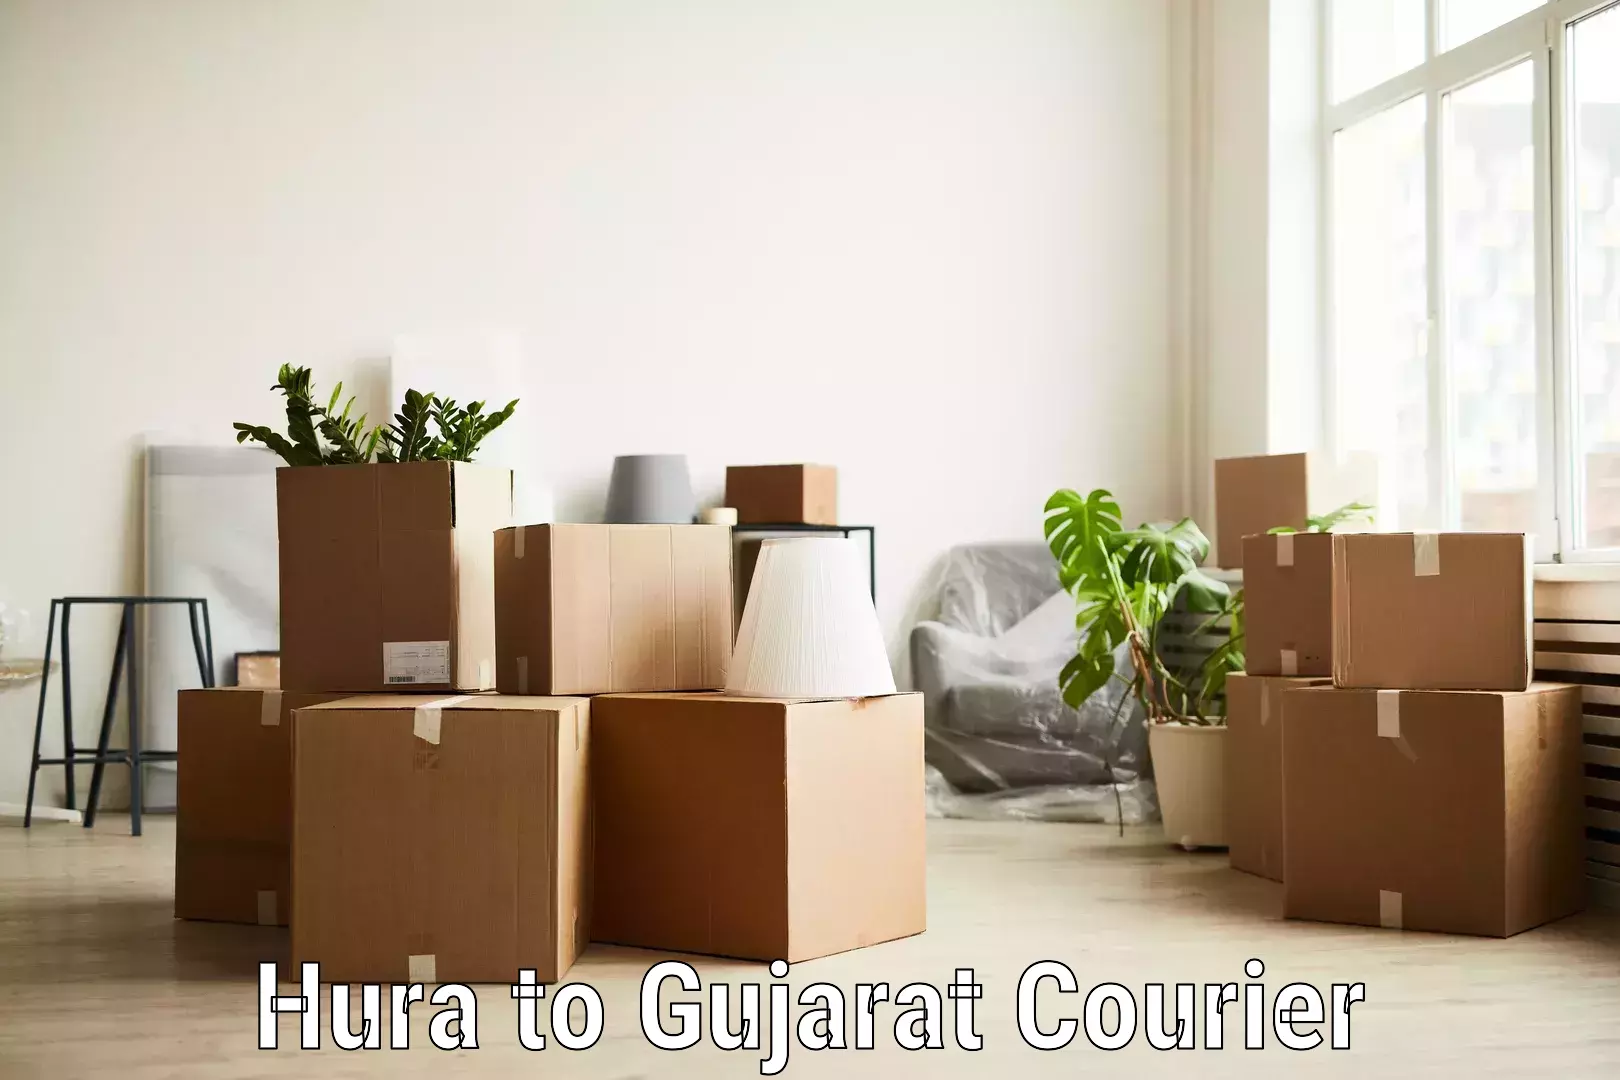 Urban courier service Hura to Gujarat